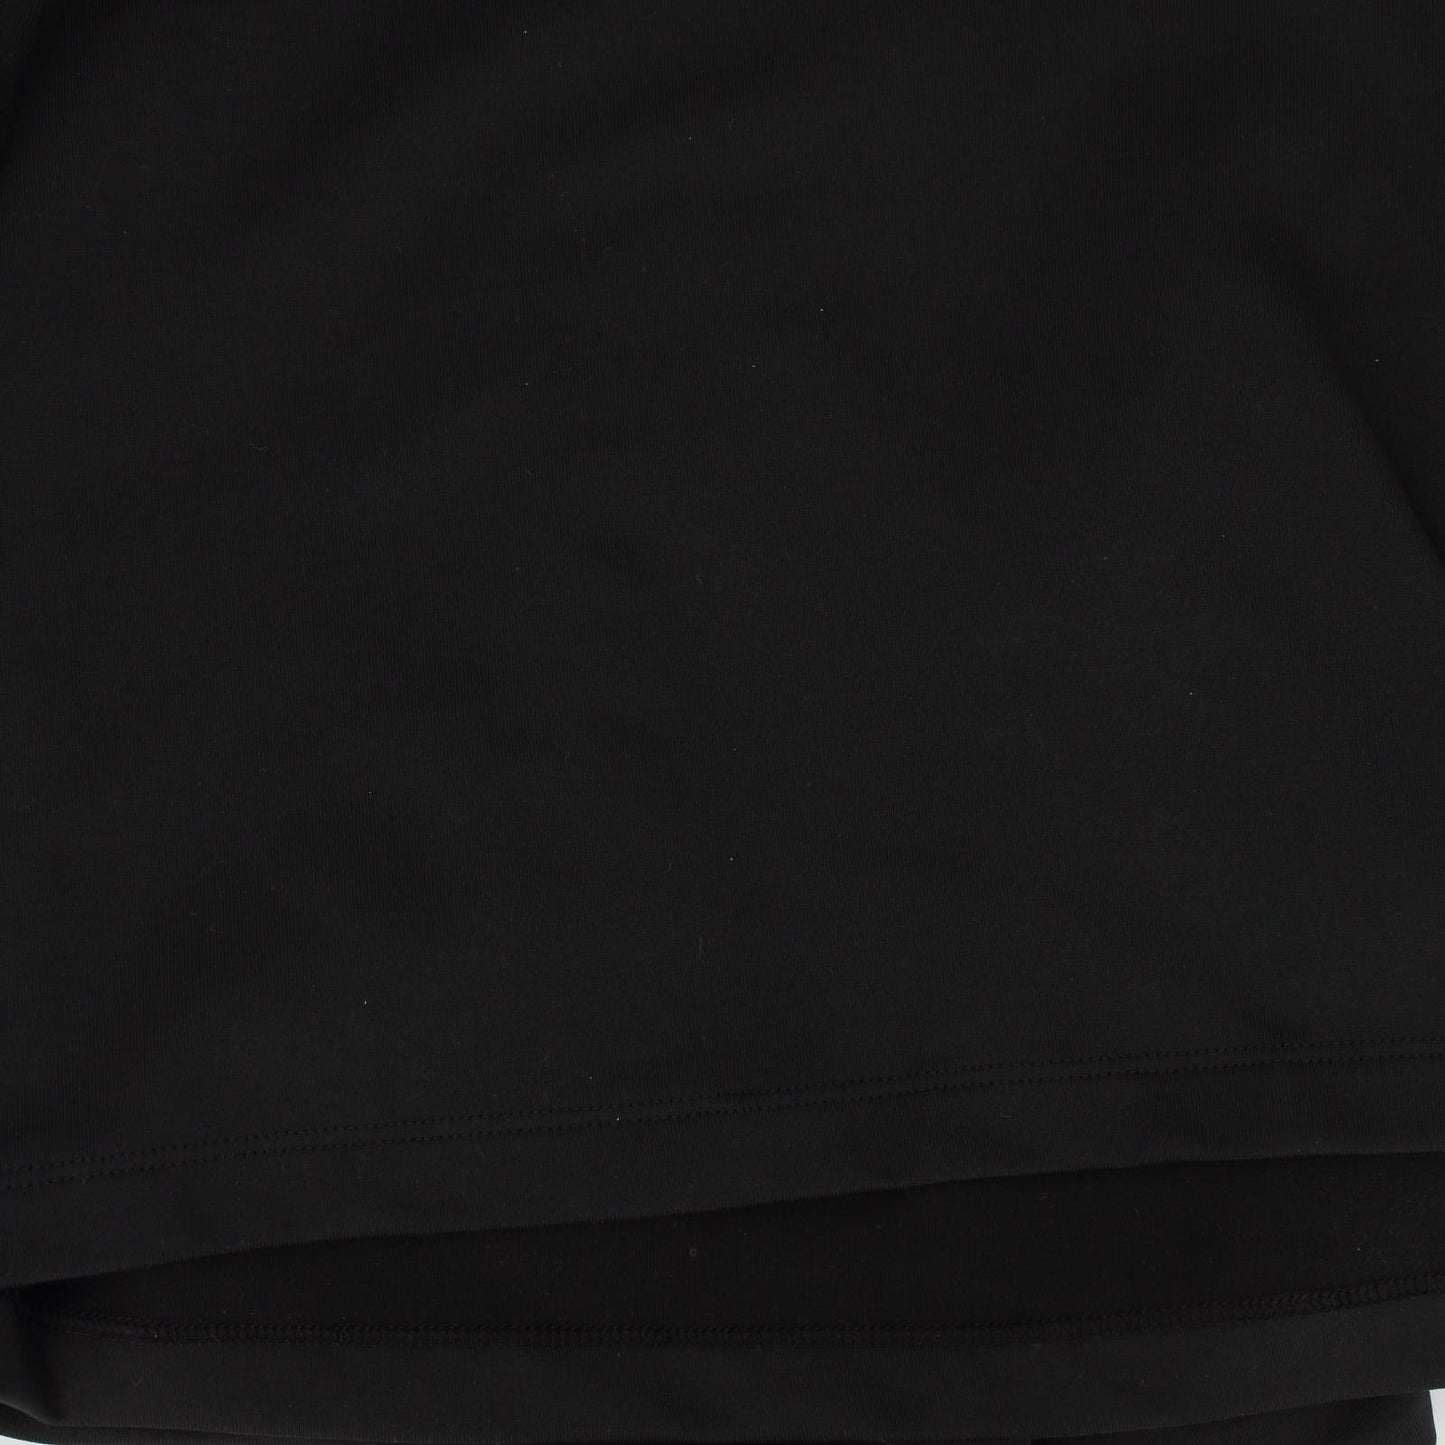 Adidas CAMO Freelift 1/2 Zip Sweatshirt Pullover Shirt Climawarm schwarz DZ7361 - Brand Dealers Arena e.K. - BDA24